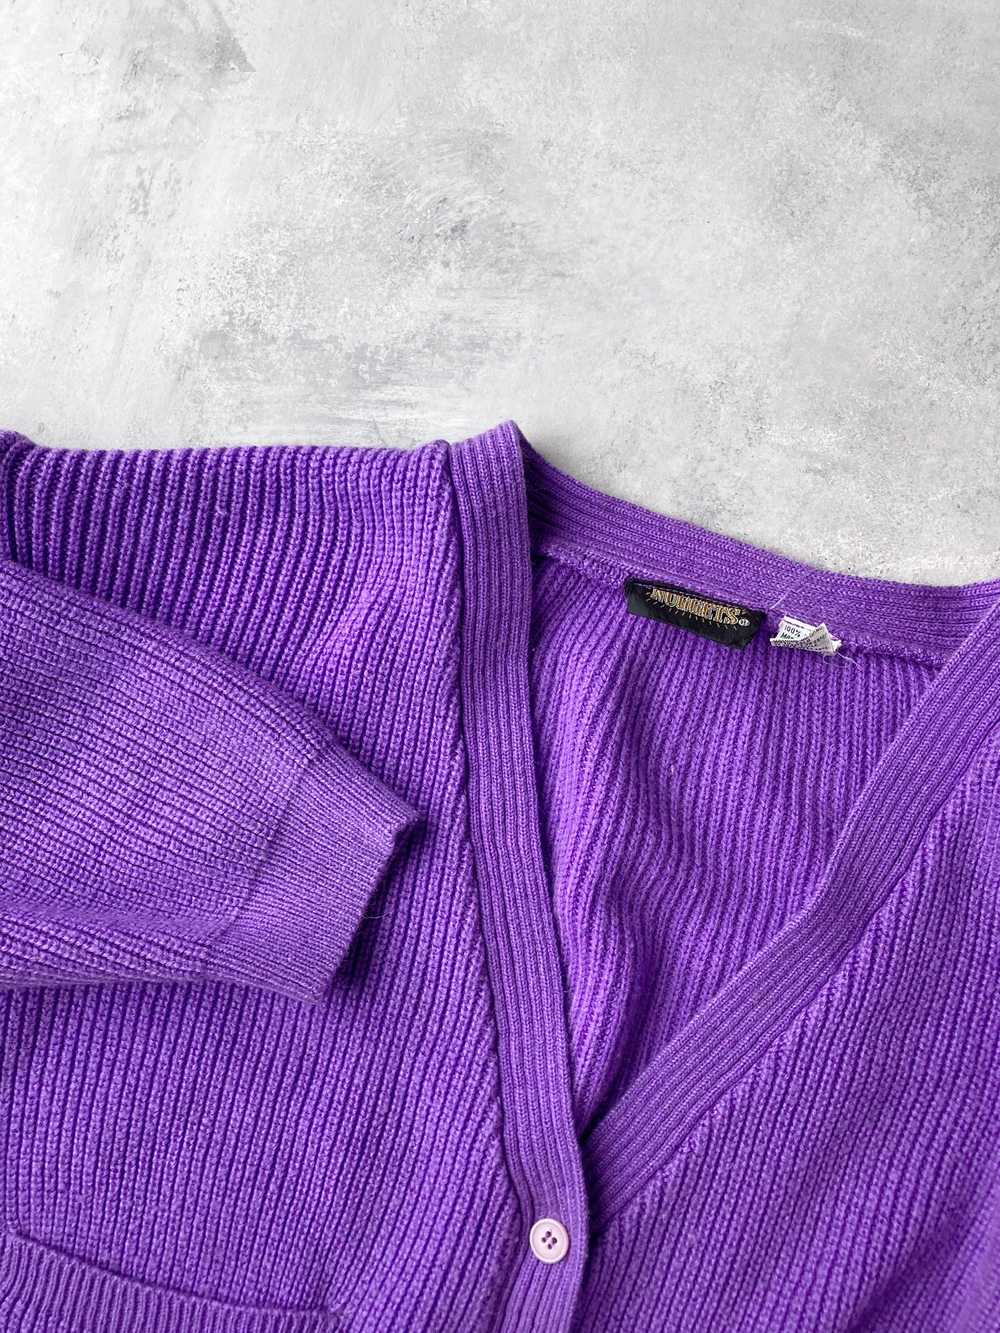 Cropped Purple Cardigan 90's - Large - image 2